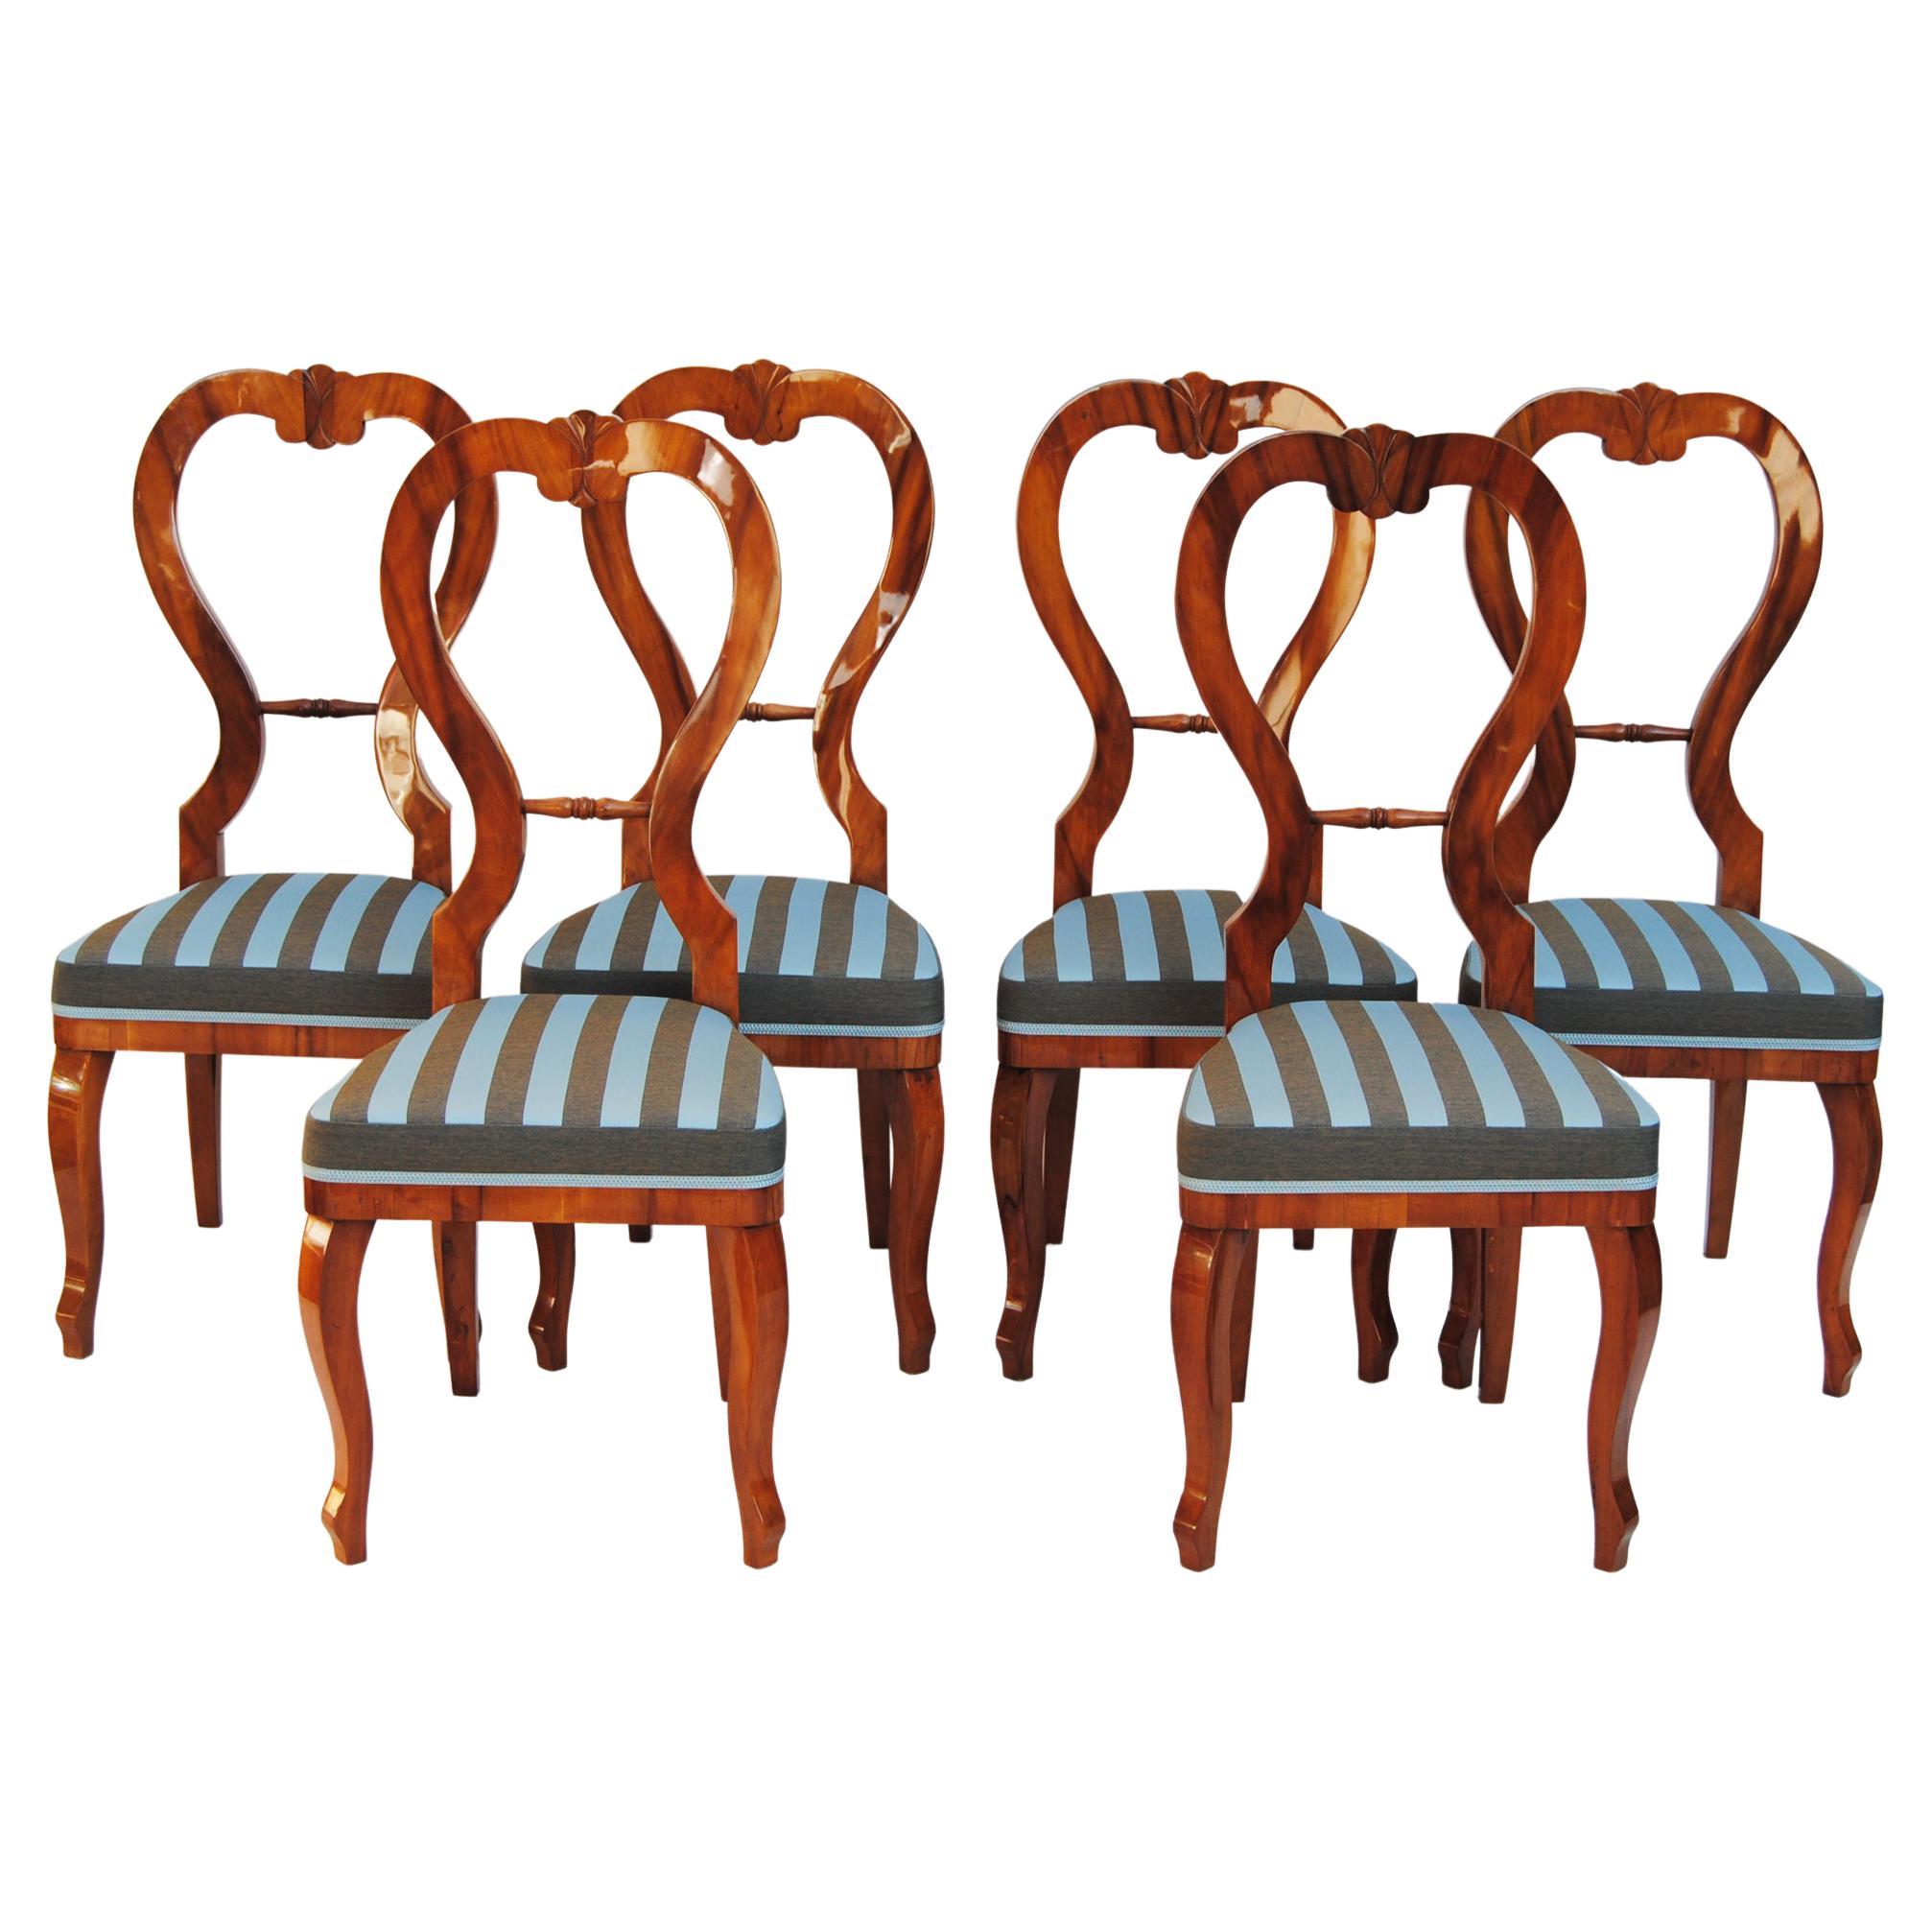 Set of Six Biedermeier Chairs, Made in Czechia, 1840s, Cherry-Tree